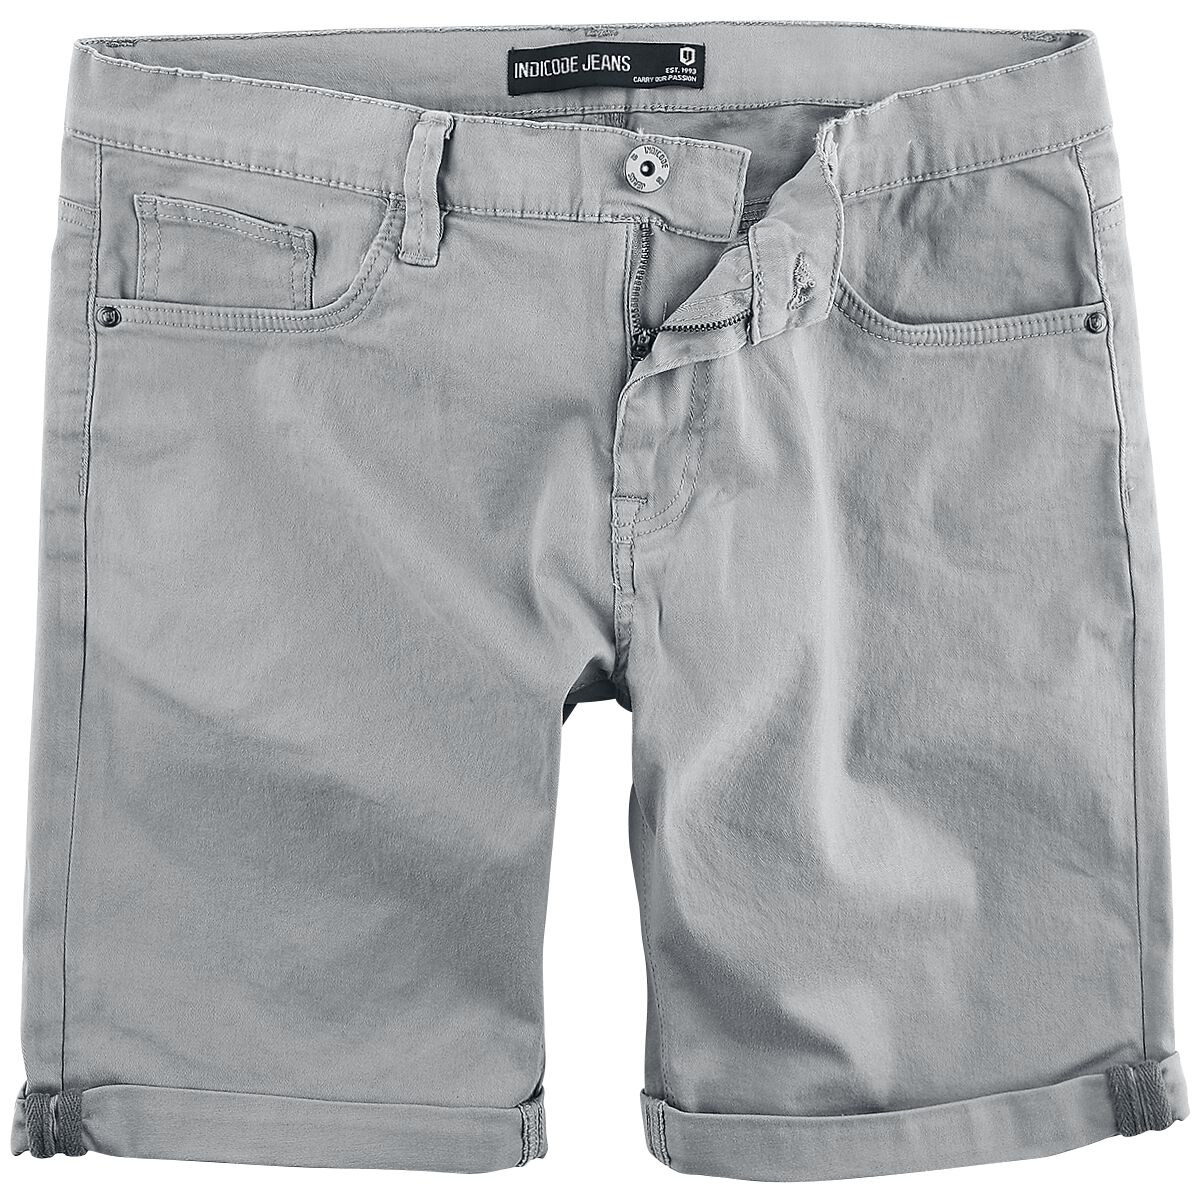 Indicode Villeurbanne Shorts grey